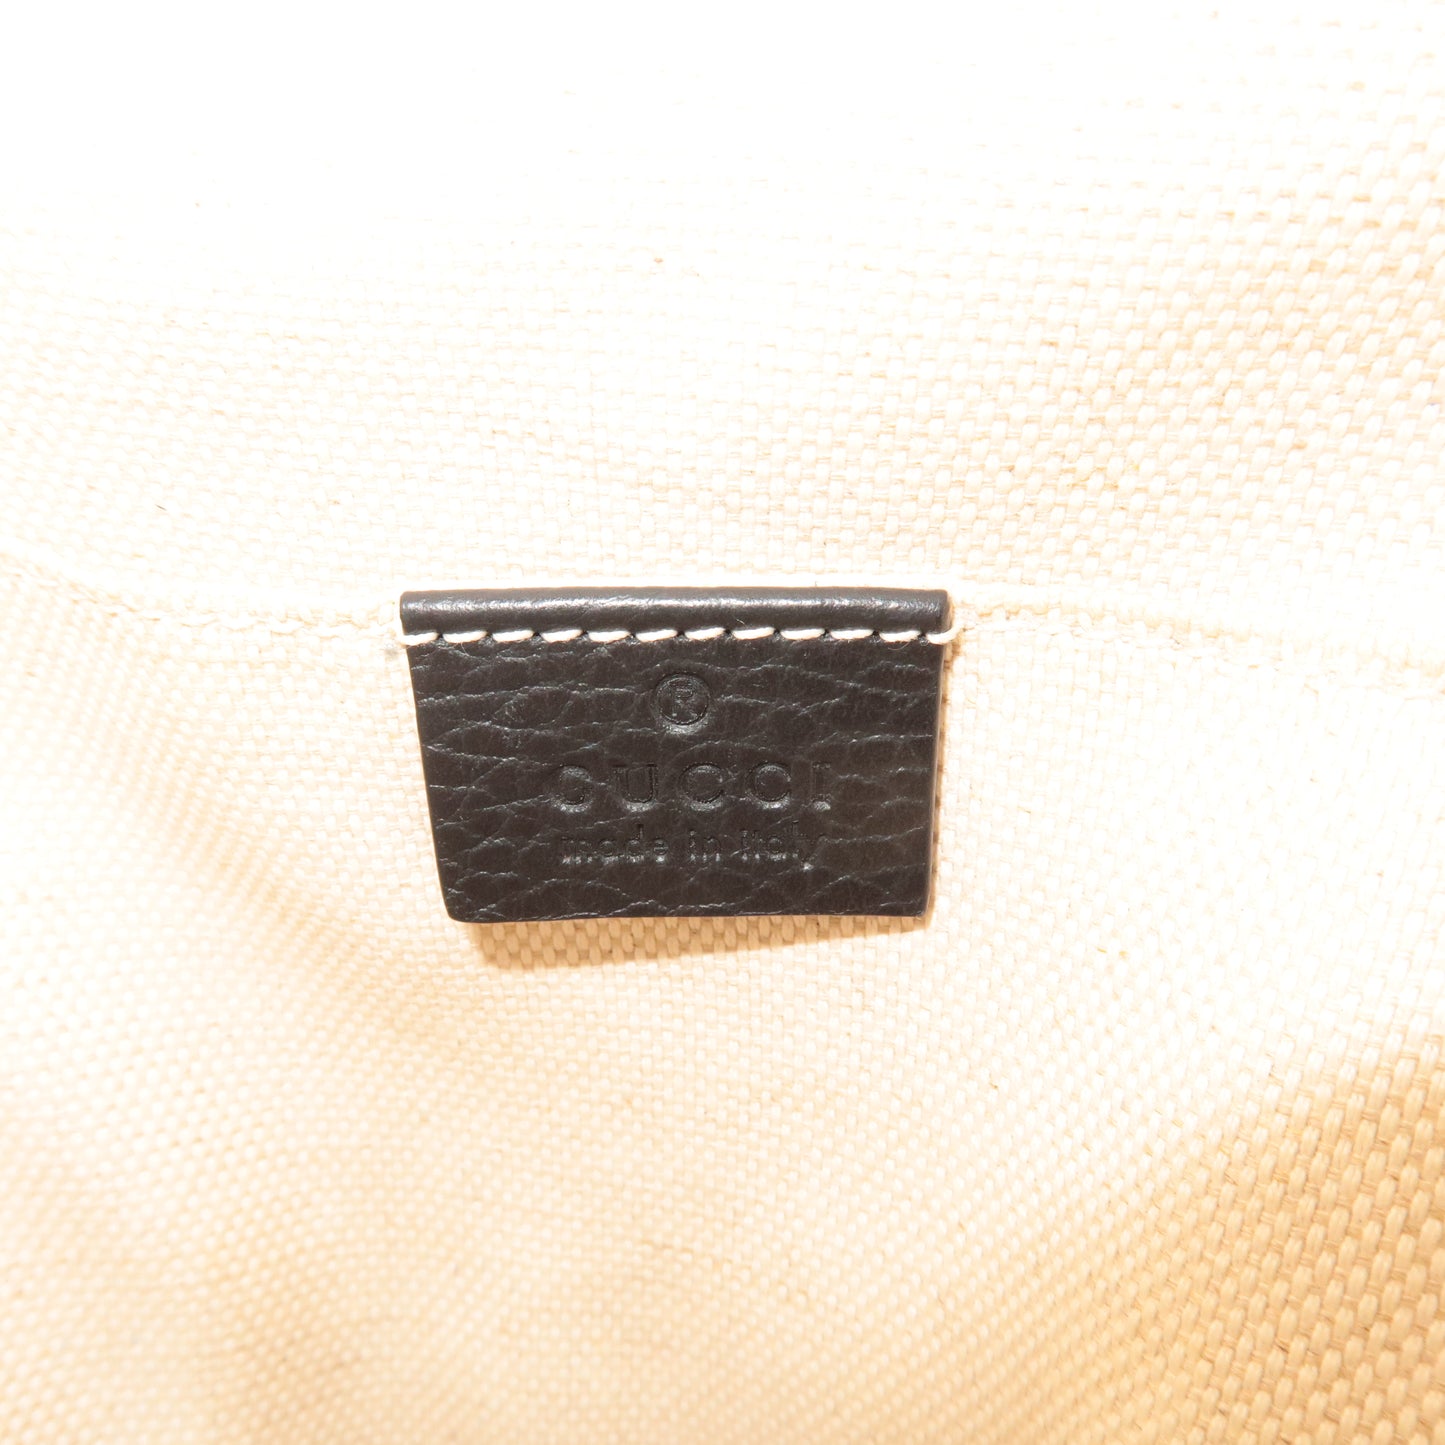 GUCCI SOHO Interlocking Leather Back Pack Ruck Sack Black 536192